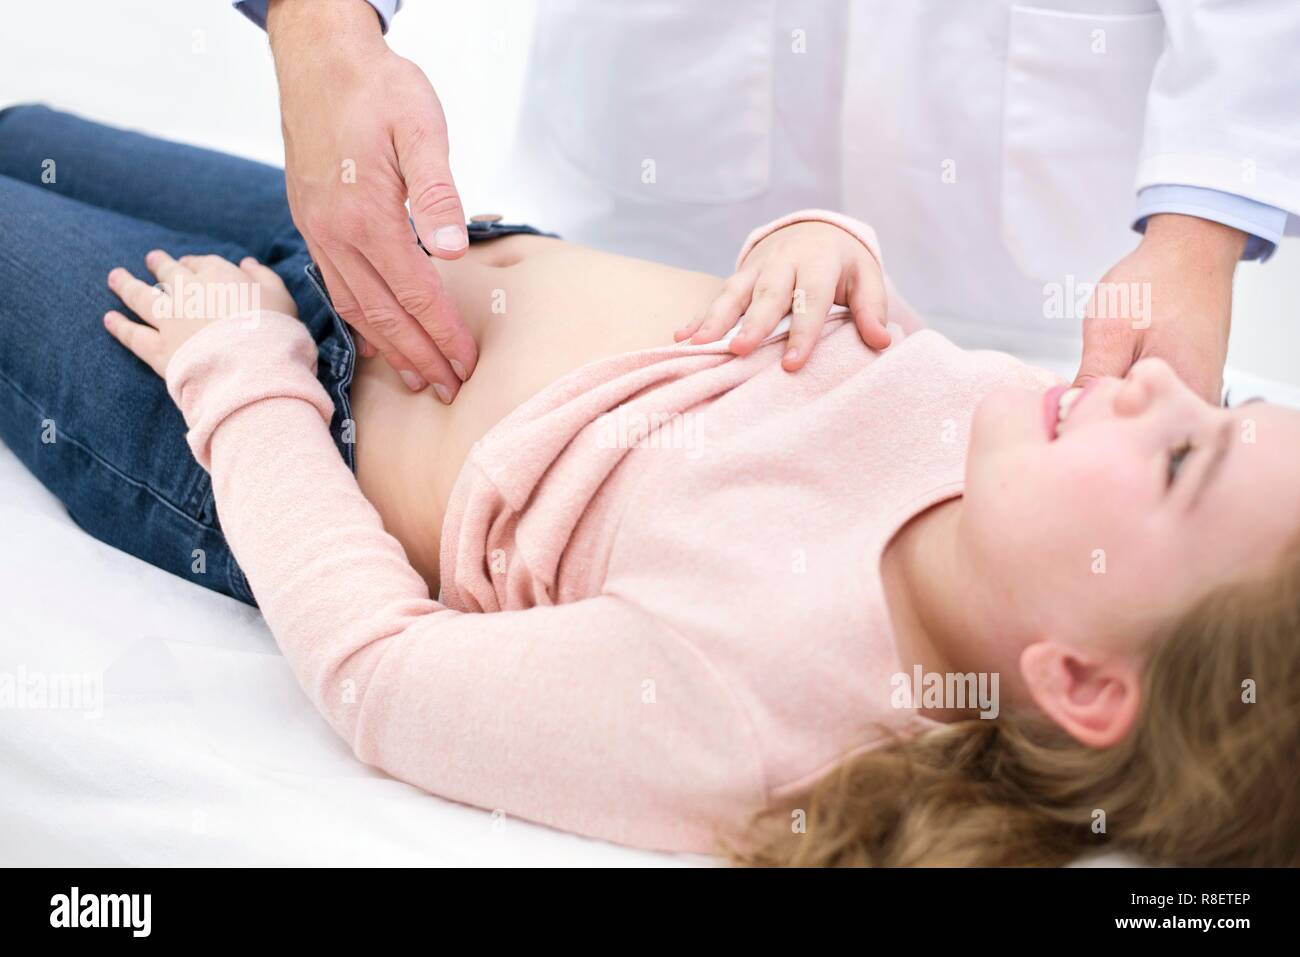 Doctor examining girl's abdomen Stock Photo